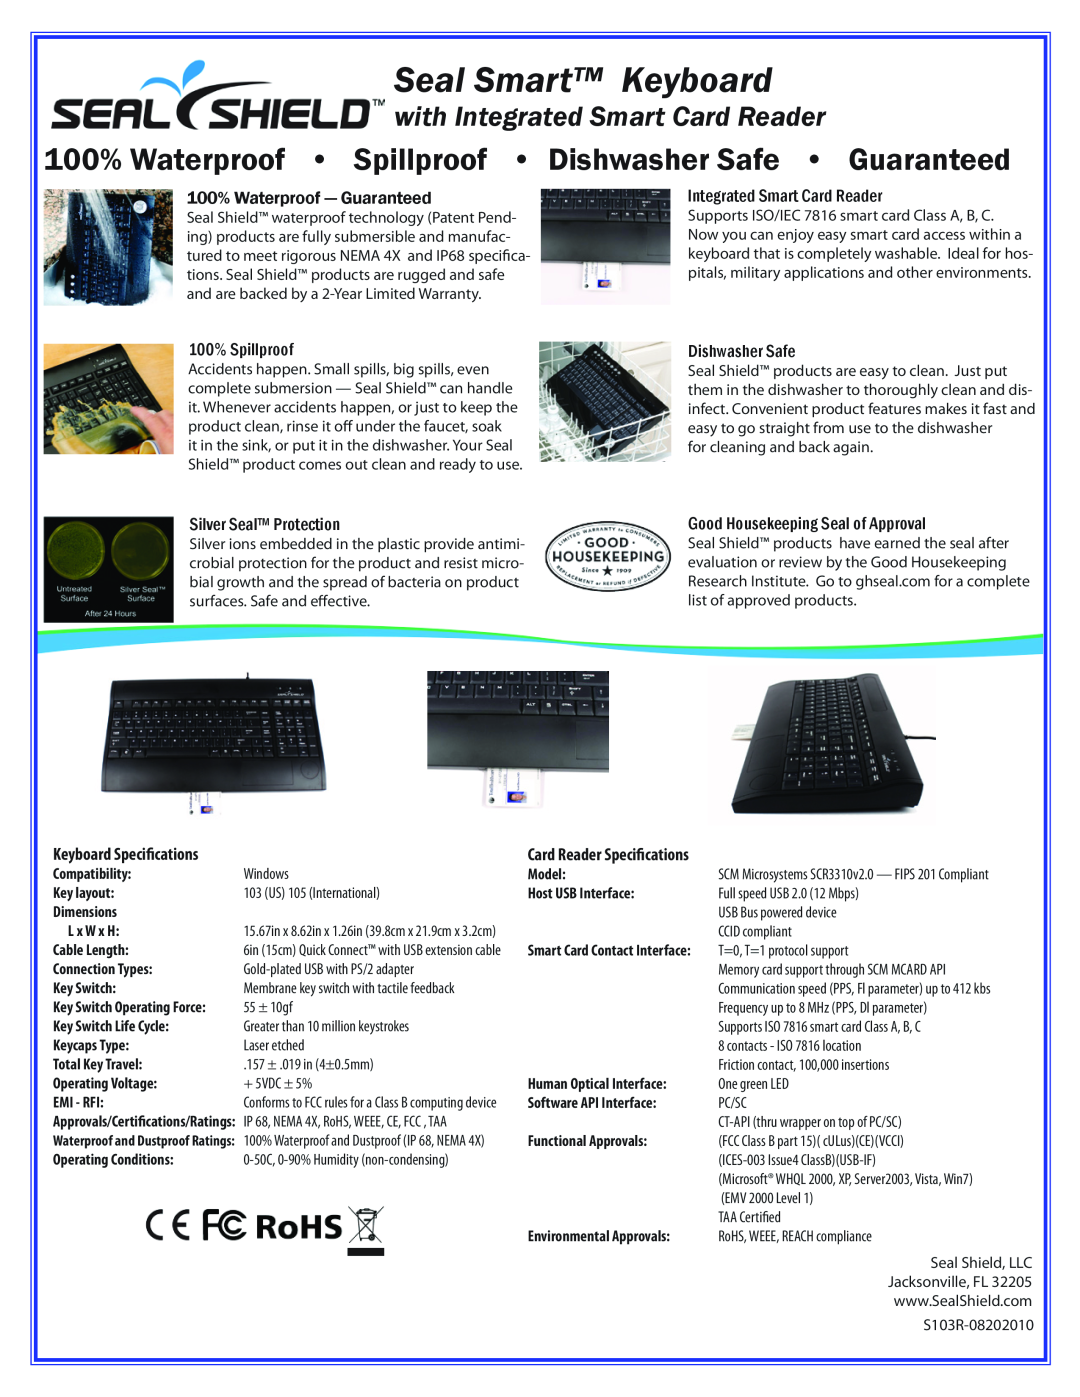 Seal Shield S103R warranty 100% Waterproof Spillproof Dishwasher Safe Guaranteed, Seal Smart Keyboard 